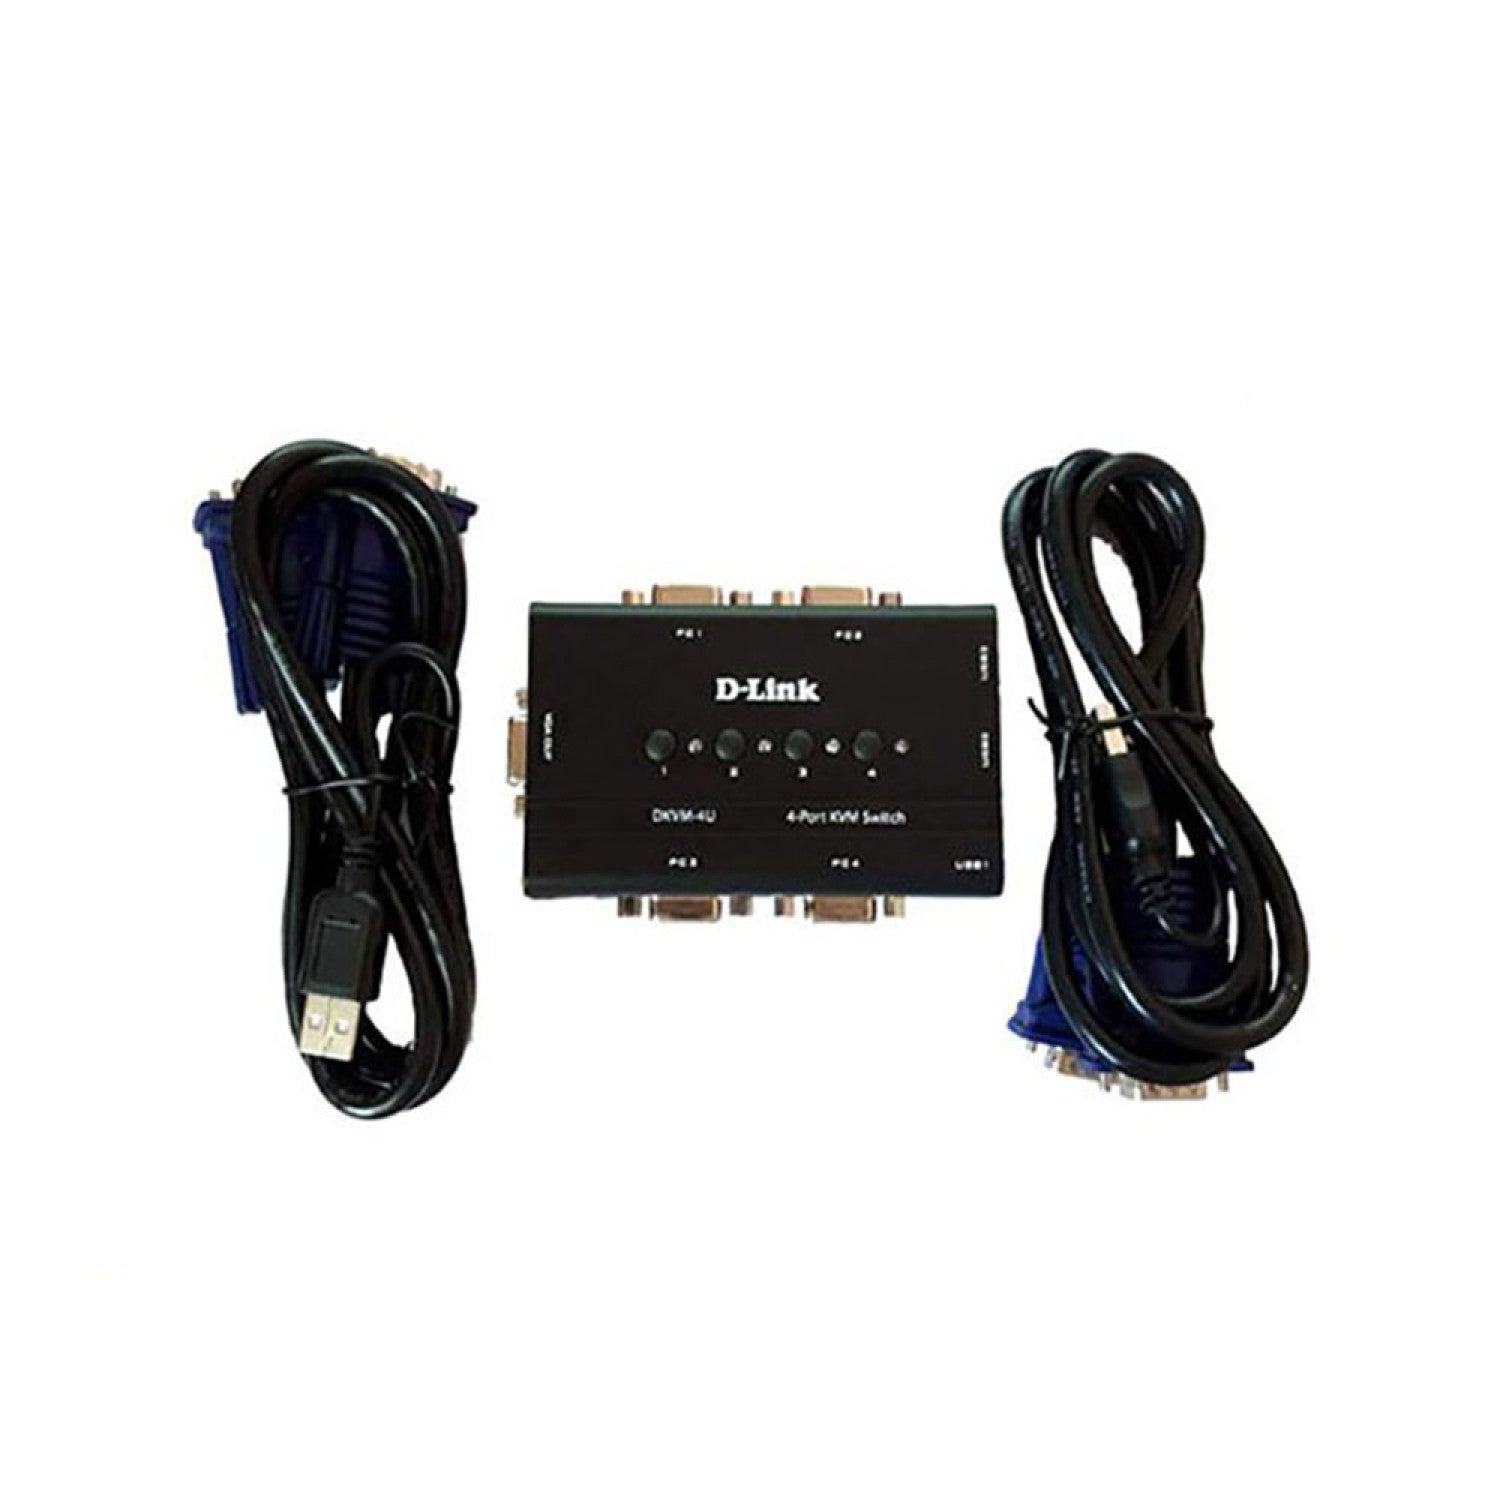 D-Link 4-Port USB KVM Switch DKVM-4U